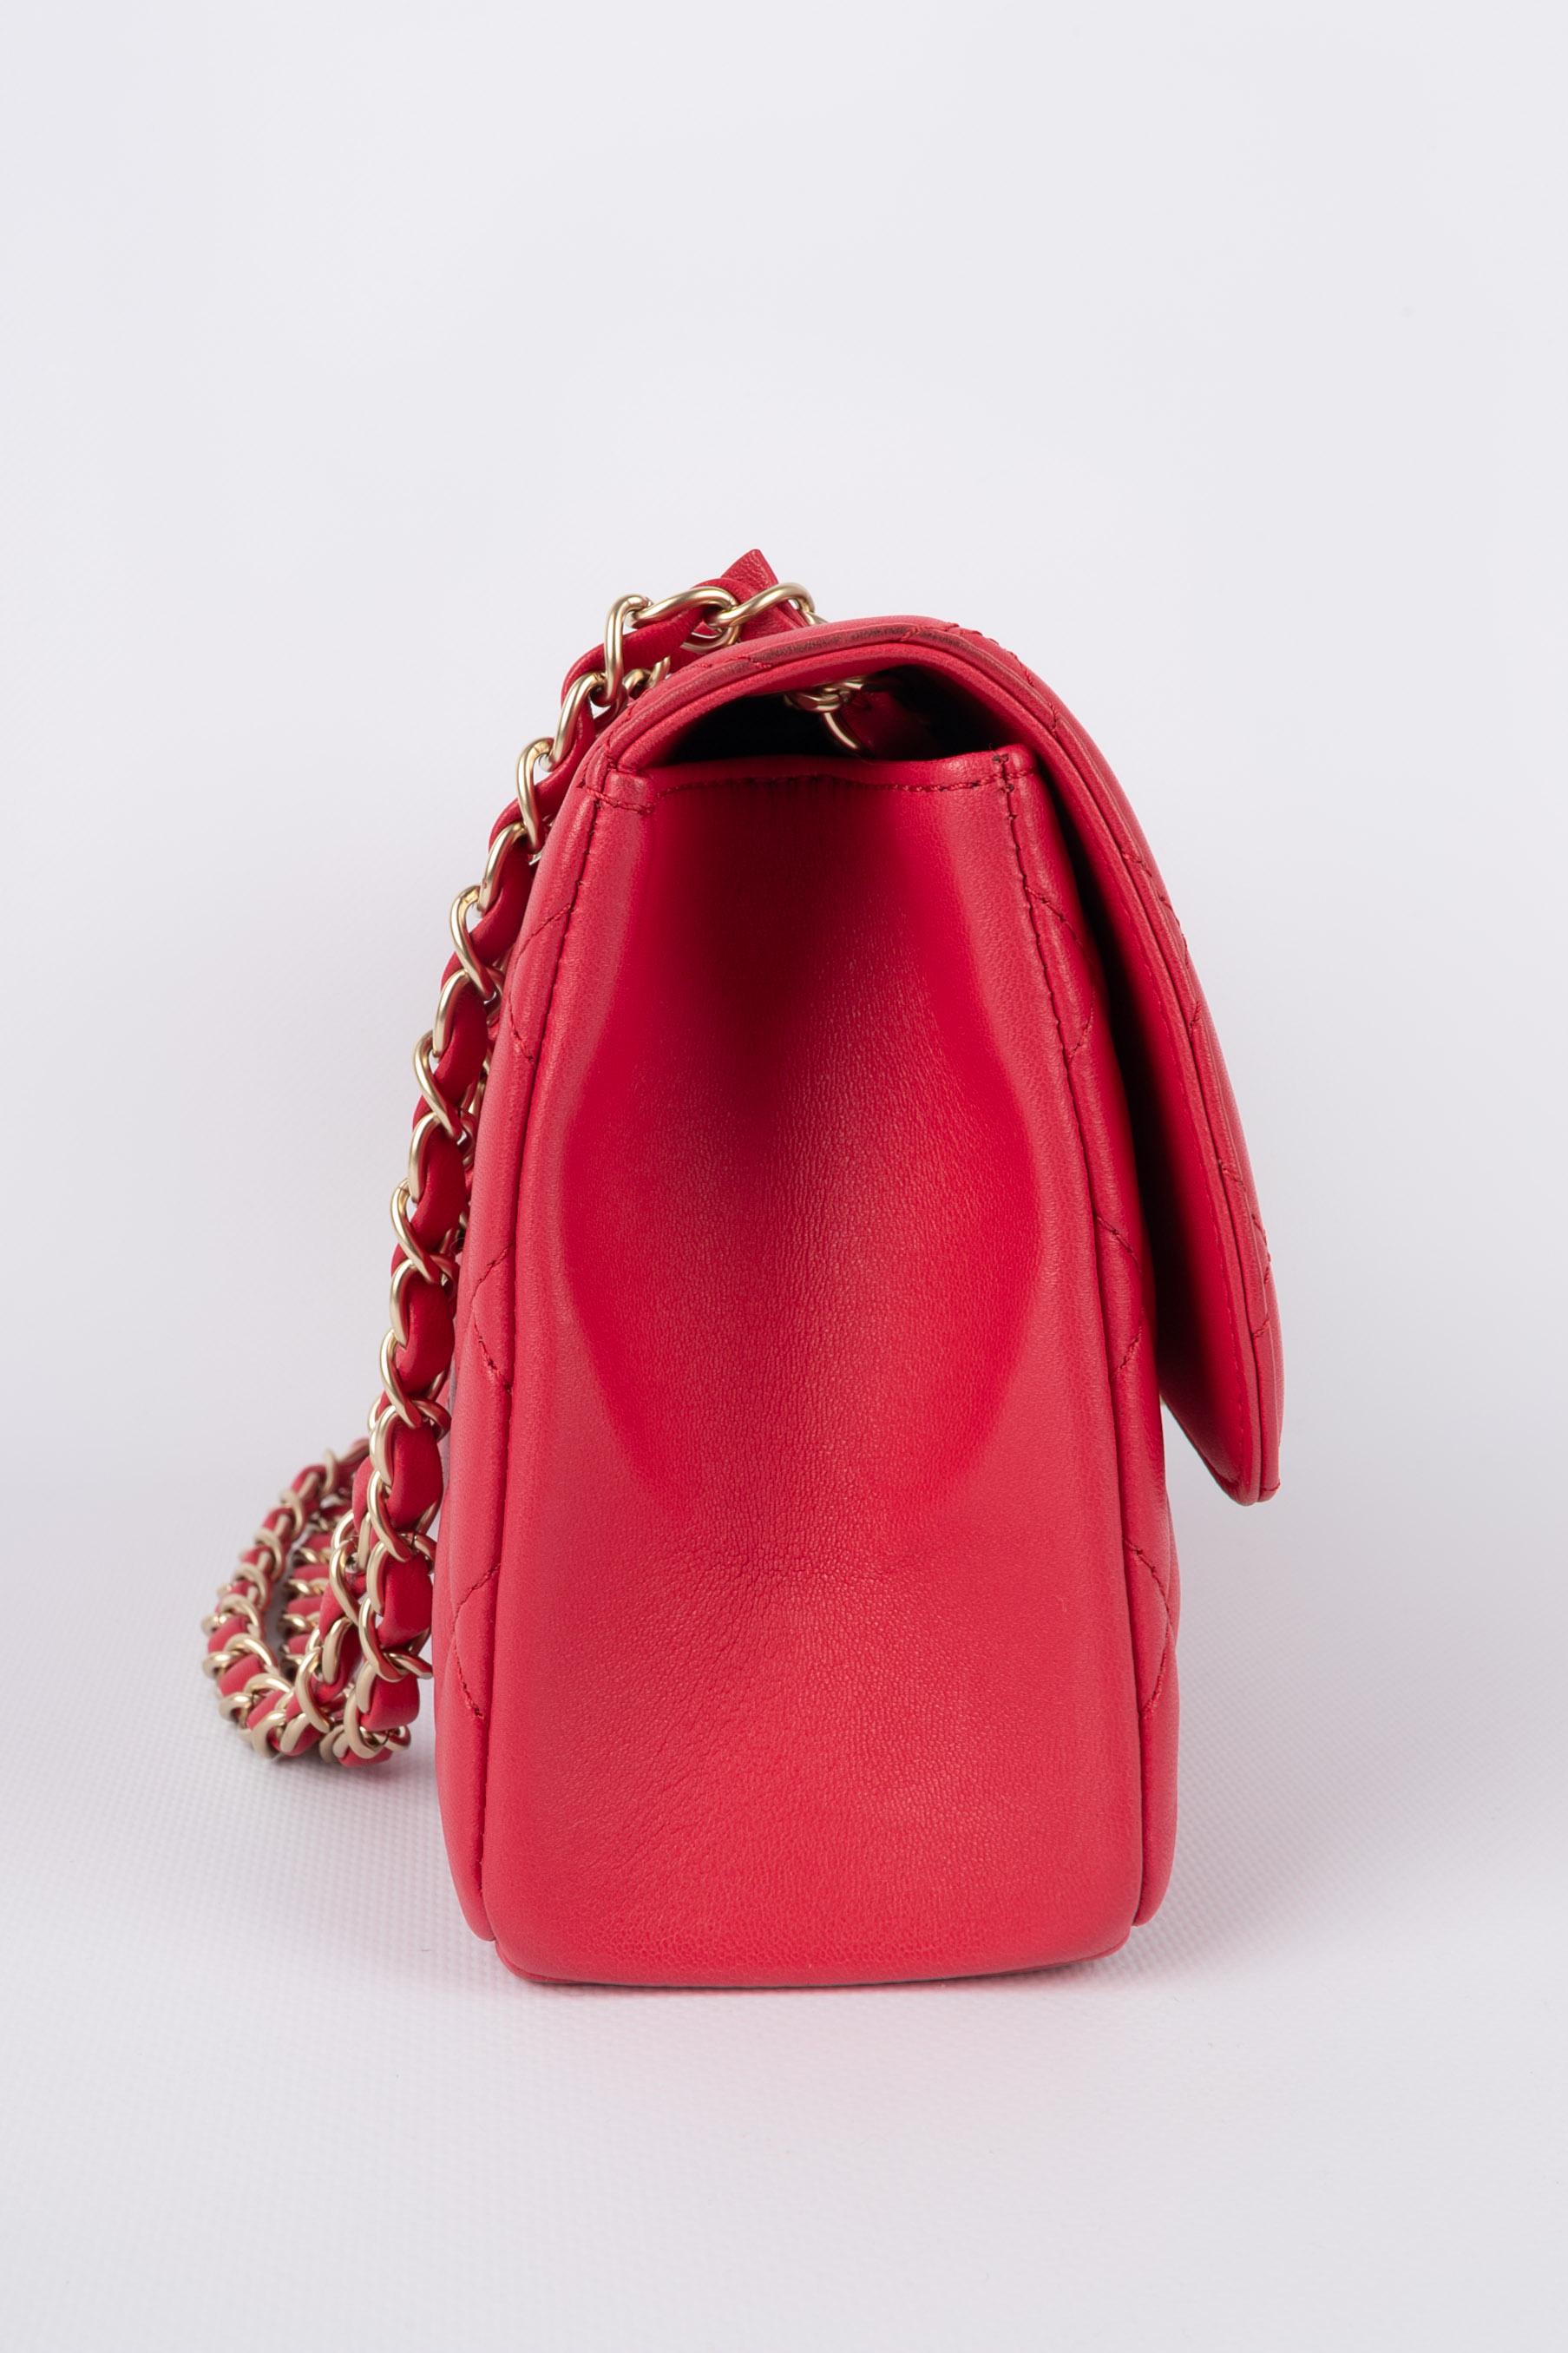 Chanel Timeless bag 2015/2016 In Excellent Condition For Sale In SAINT-OUEN-SUR-SEINE, FR